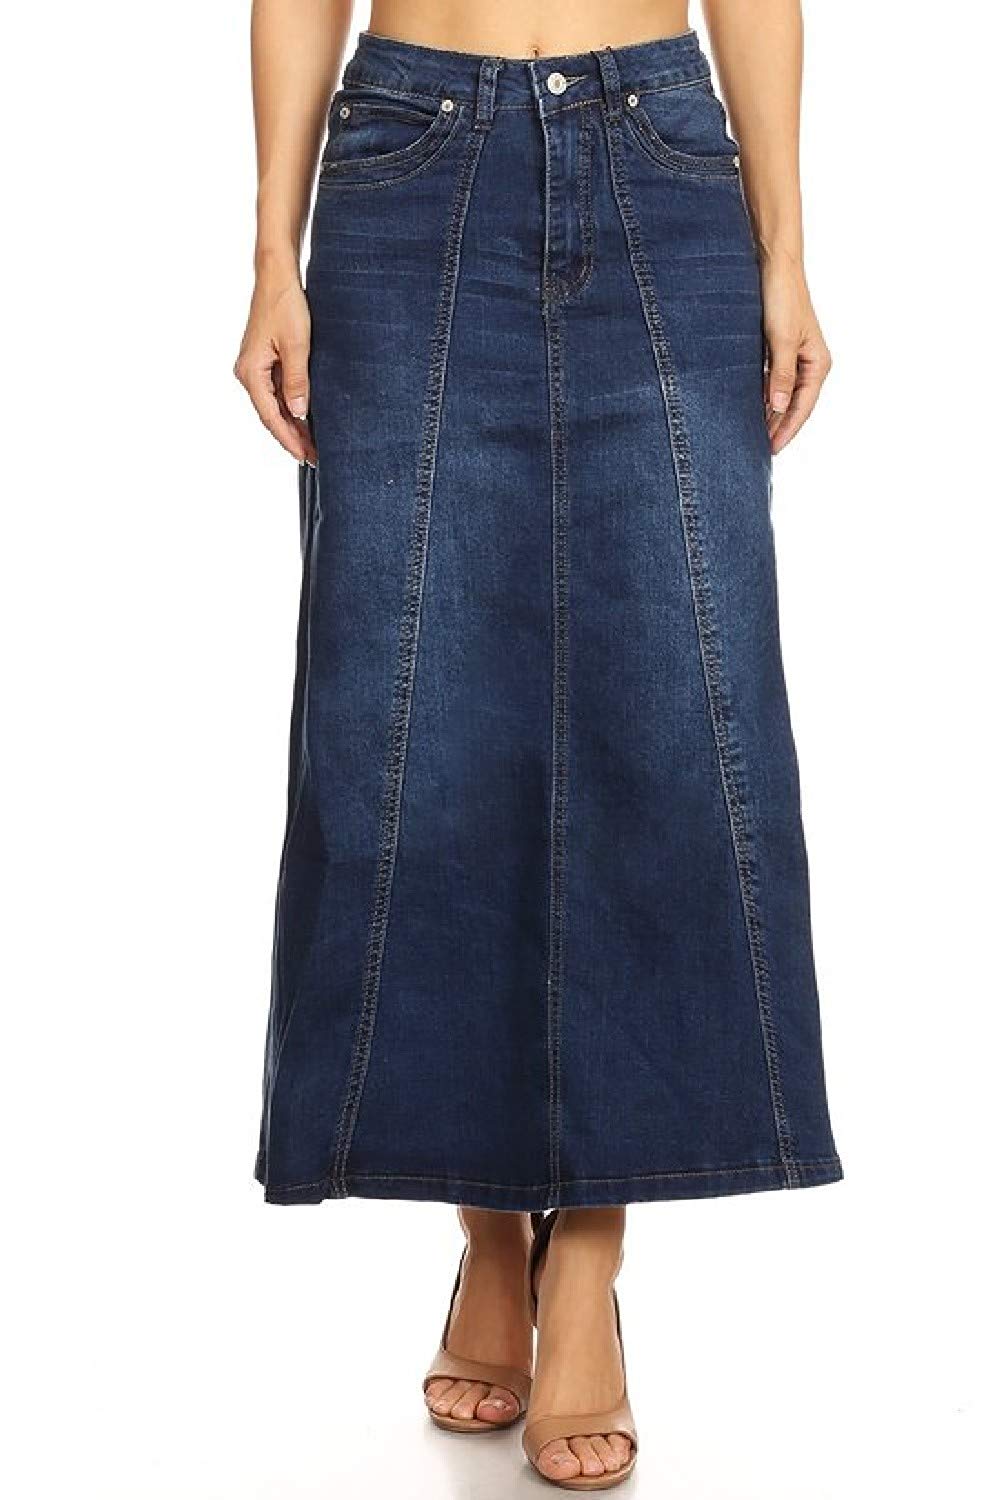 Fashion2Love + Mid Rise A-Line Long Denim Skirt